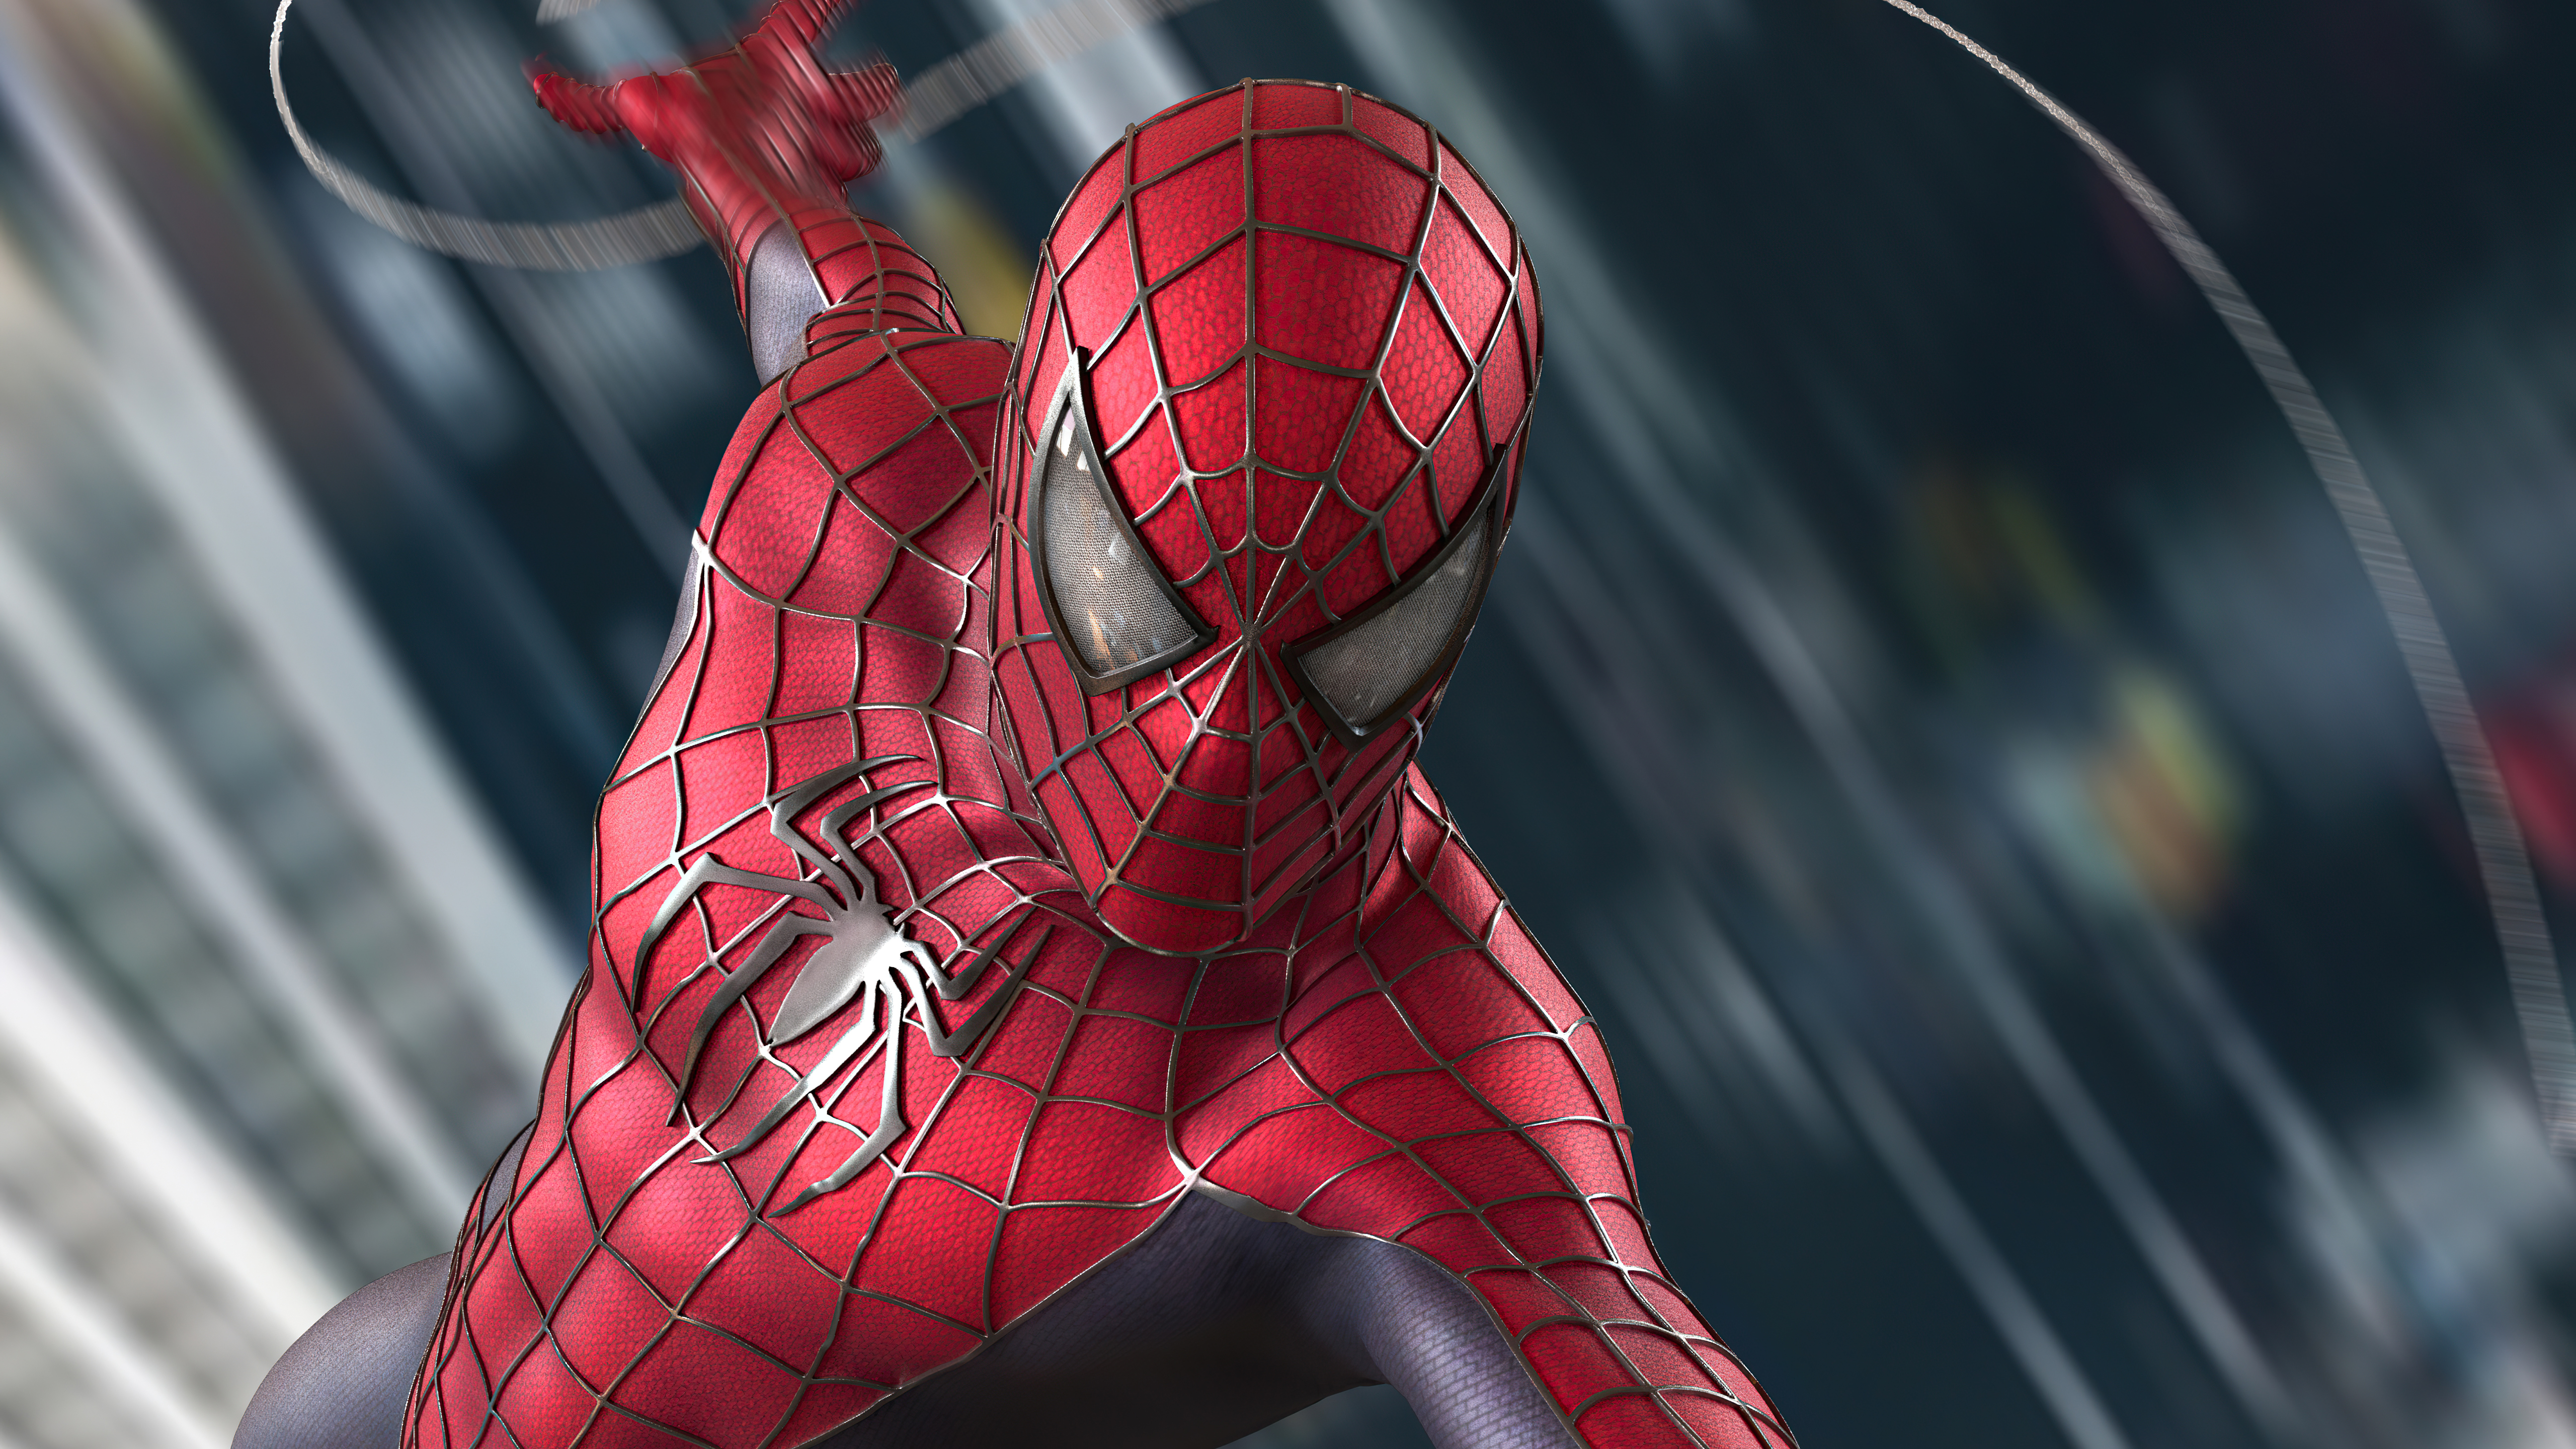 4K Spider-Man 2 Fondos de pantalla | Fondos de Escritorio